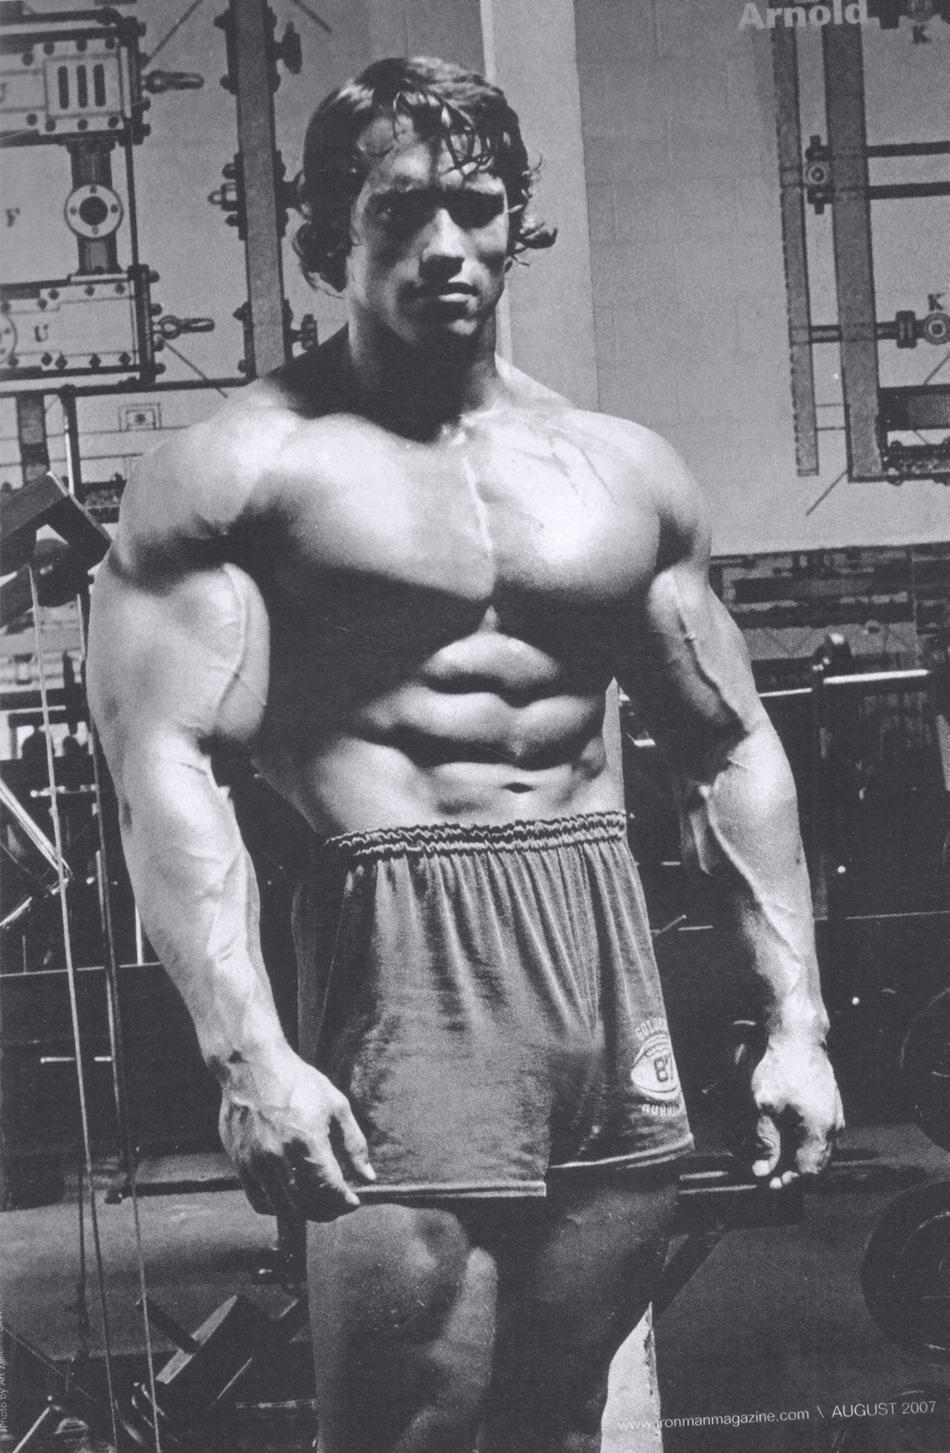 Arnold Schwarzenegger Best Gallery Of This Bodybuilding Icon!